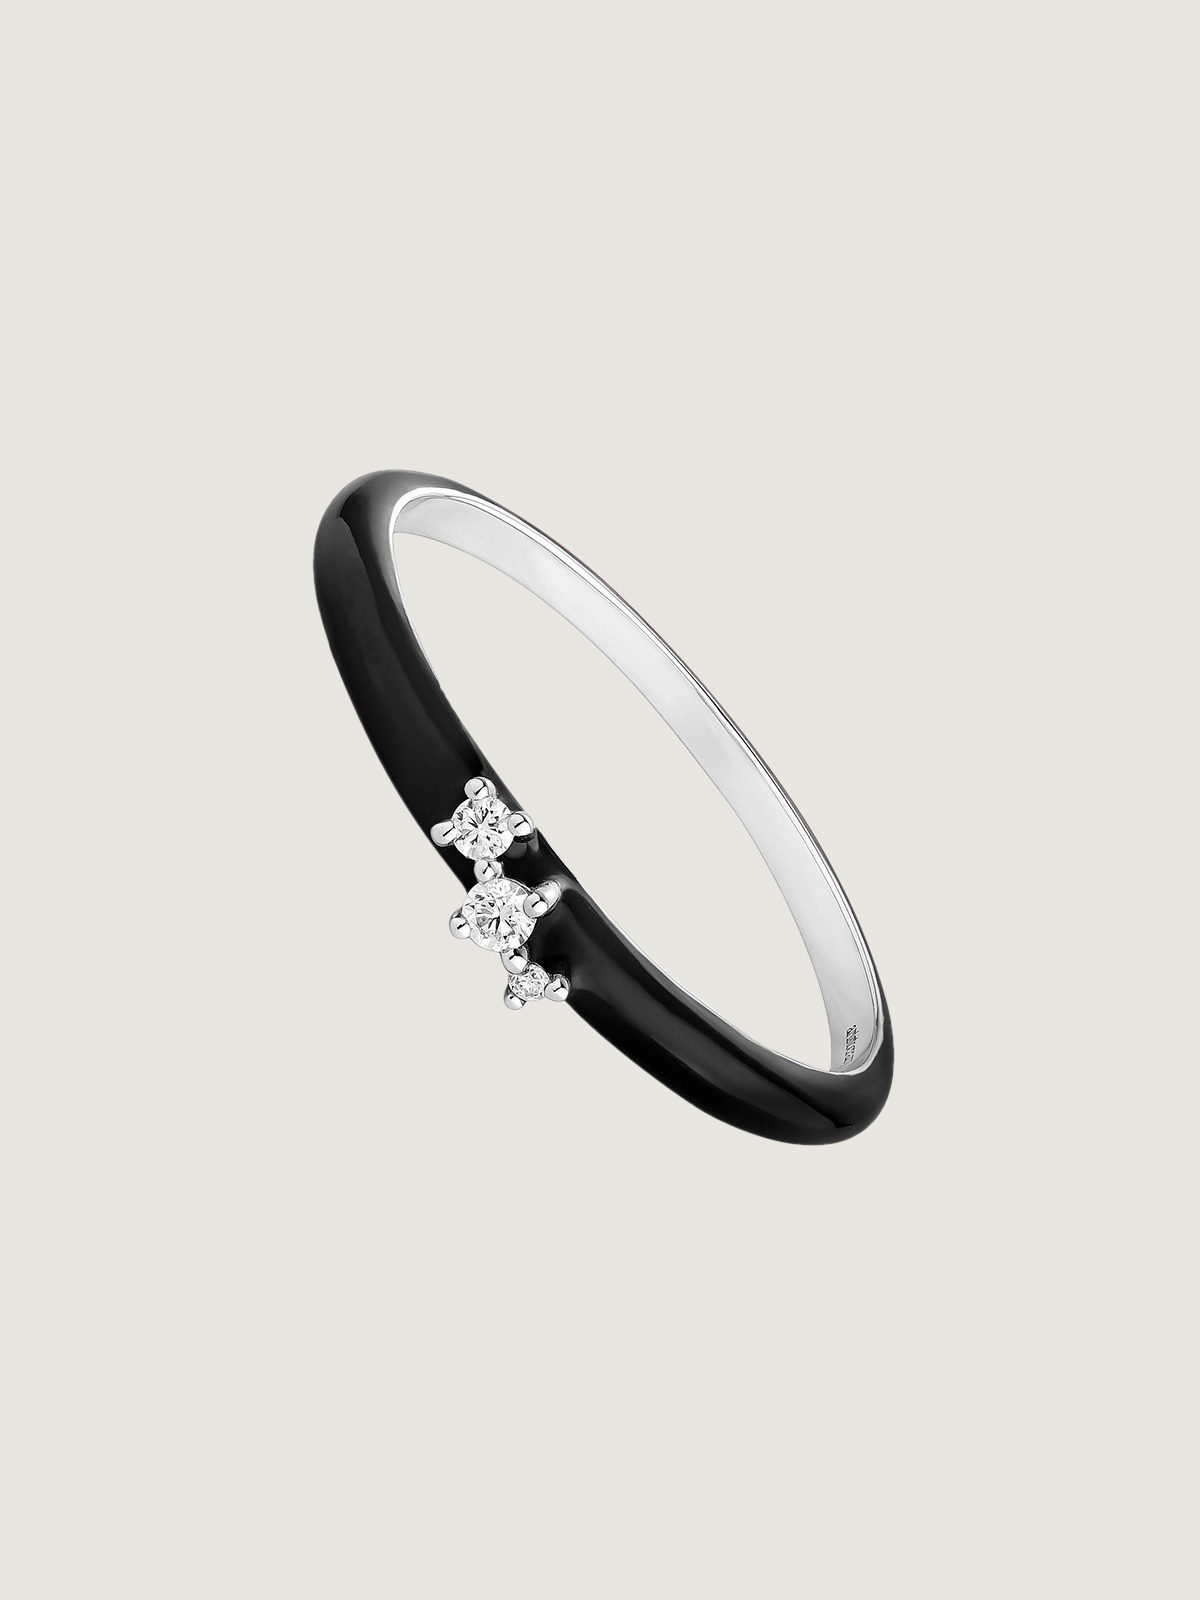 18K White Gold Ring with Black Enamel and Diamonds